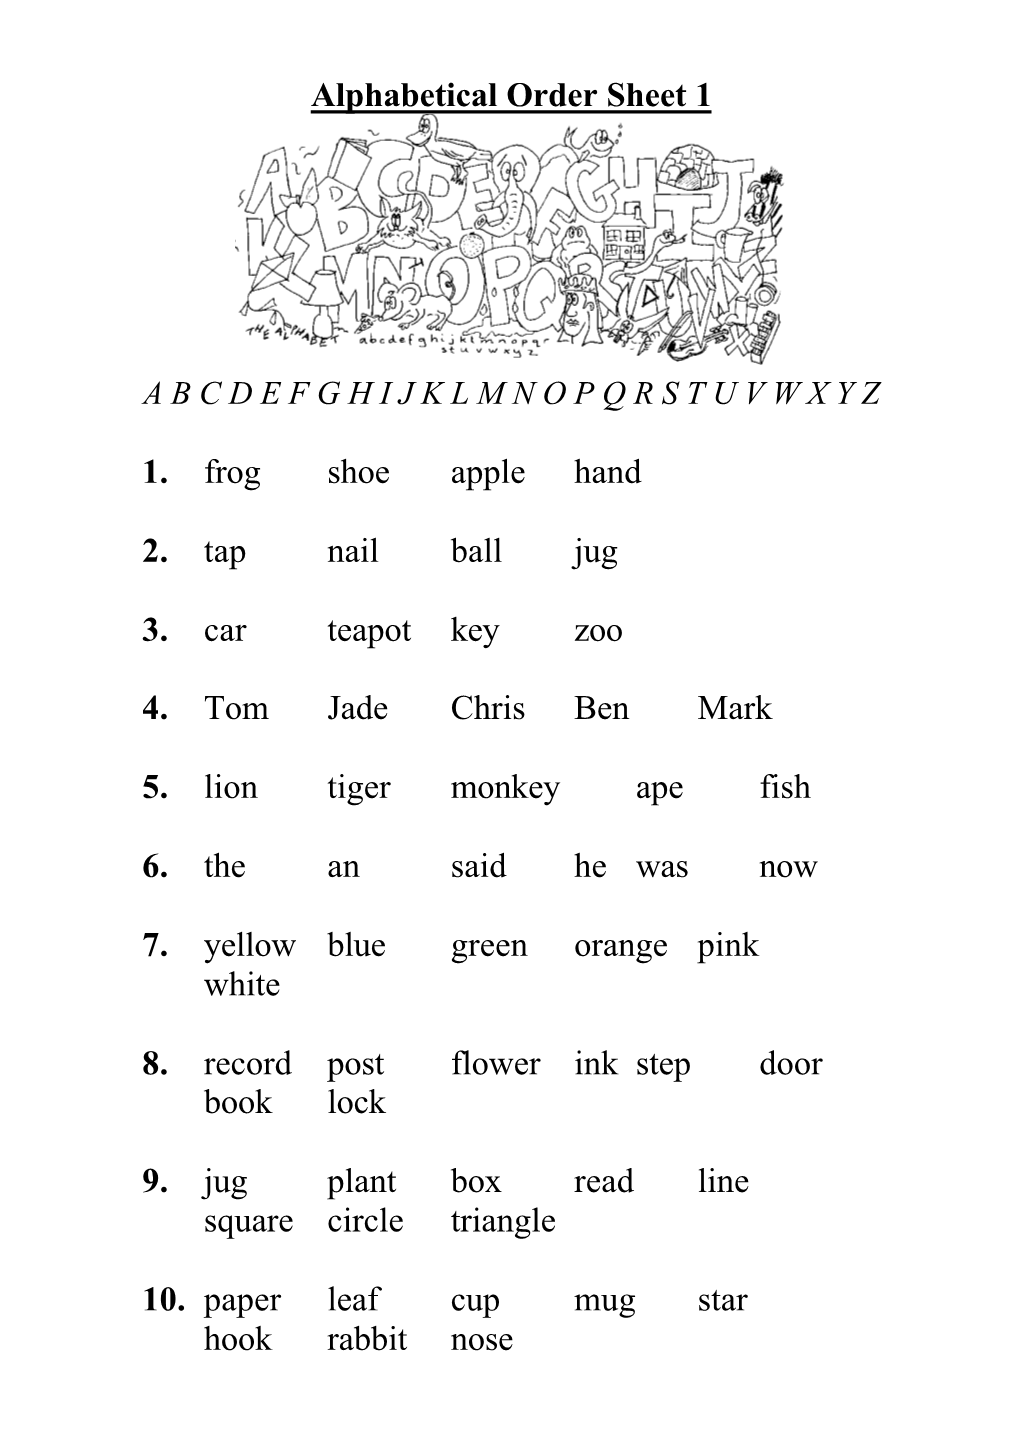 Alphabetical Order Sheet 1